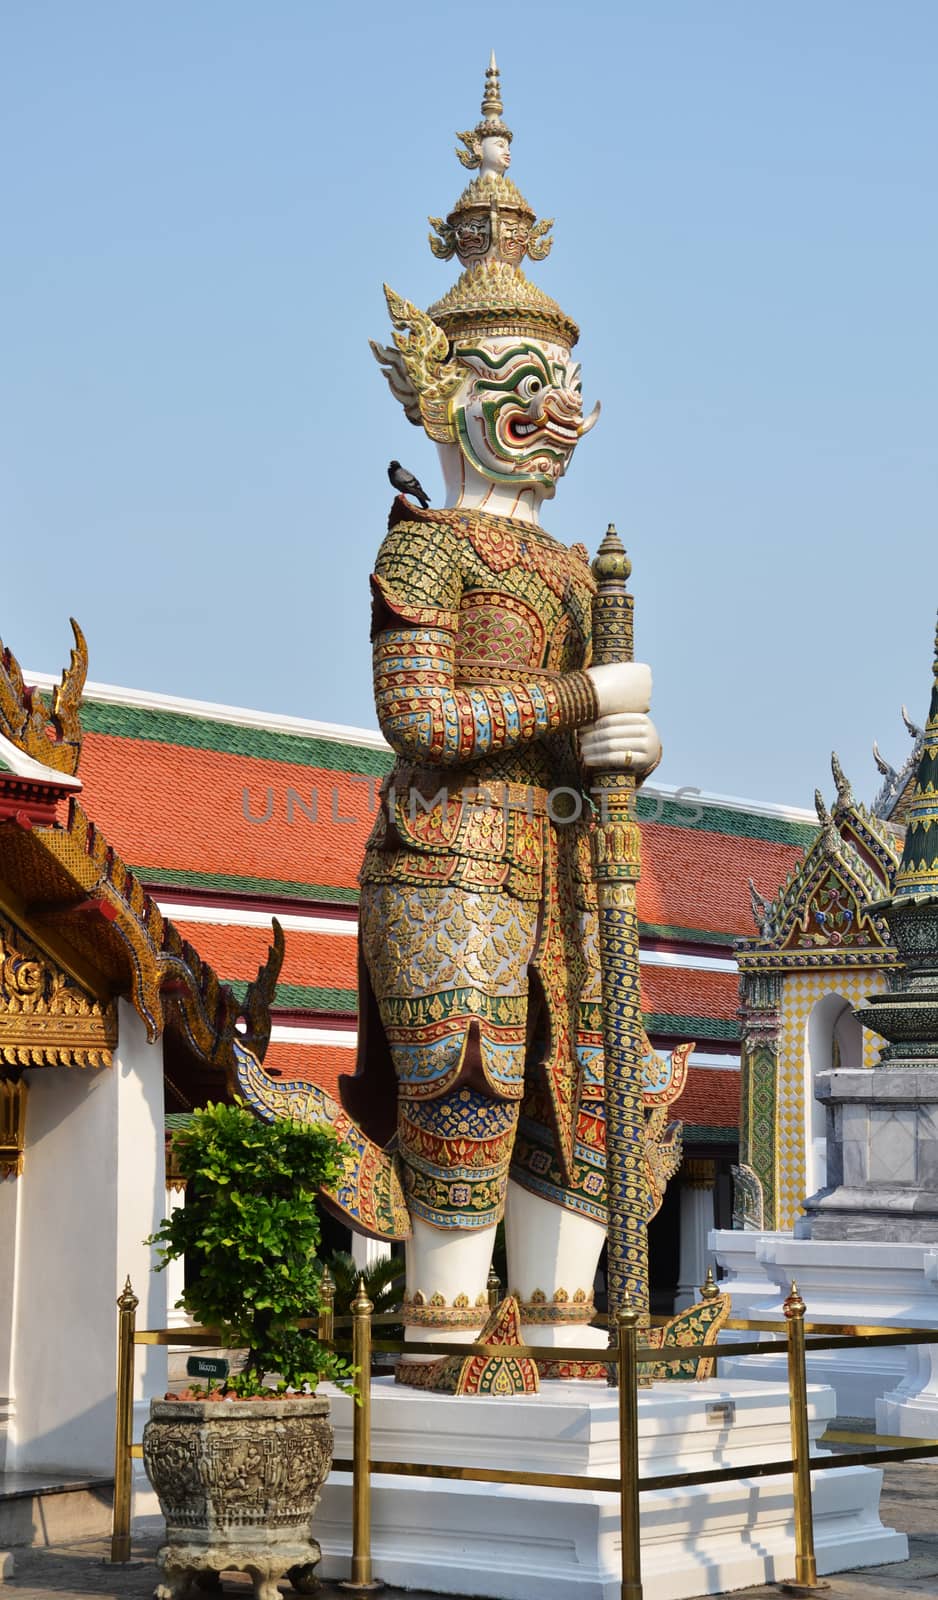 Royal Palace complex in Bangkok, Thailand - statue